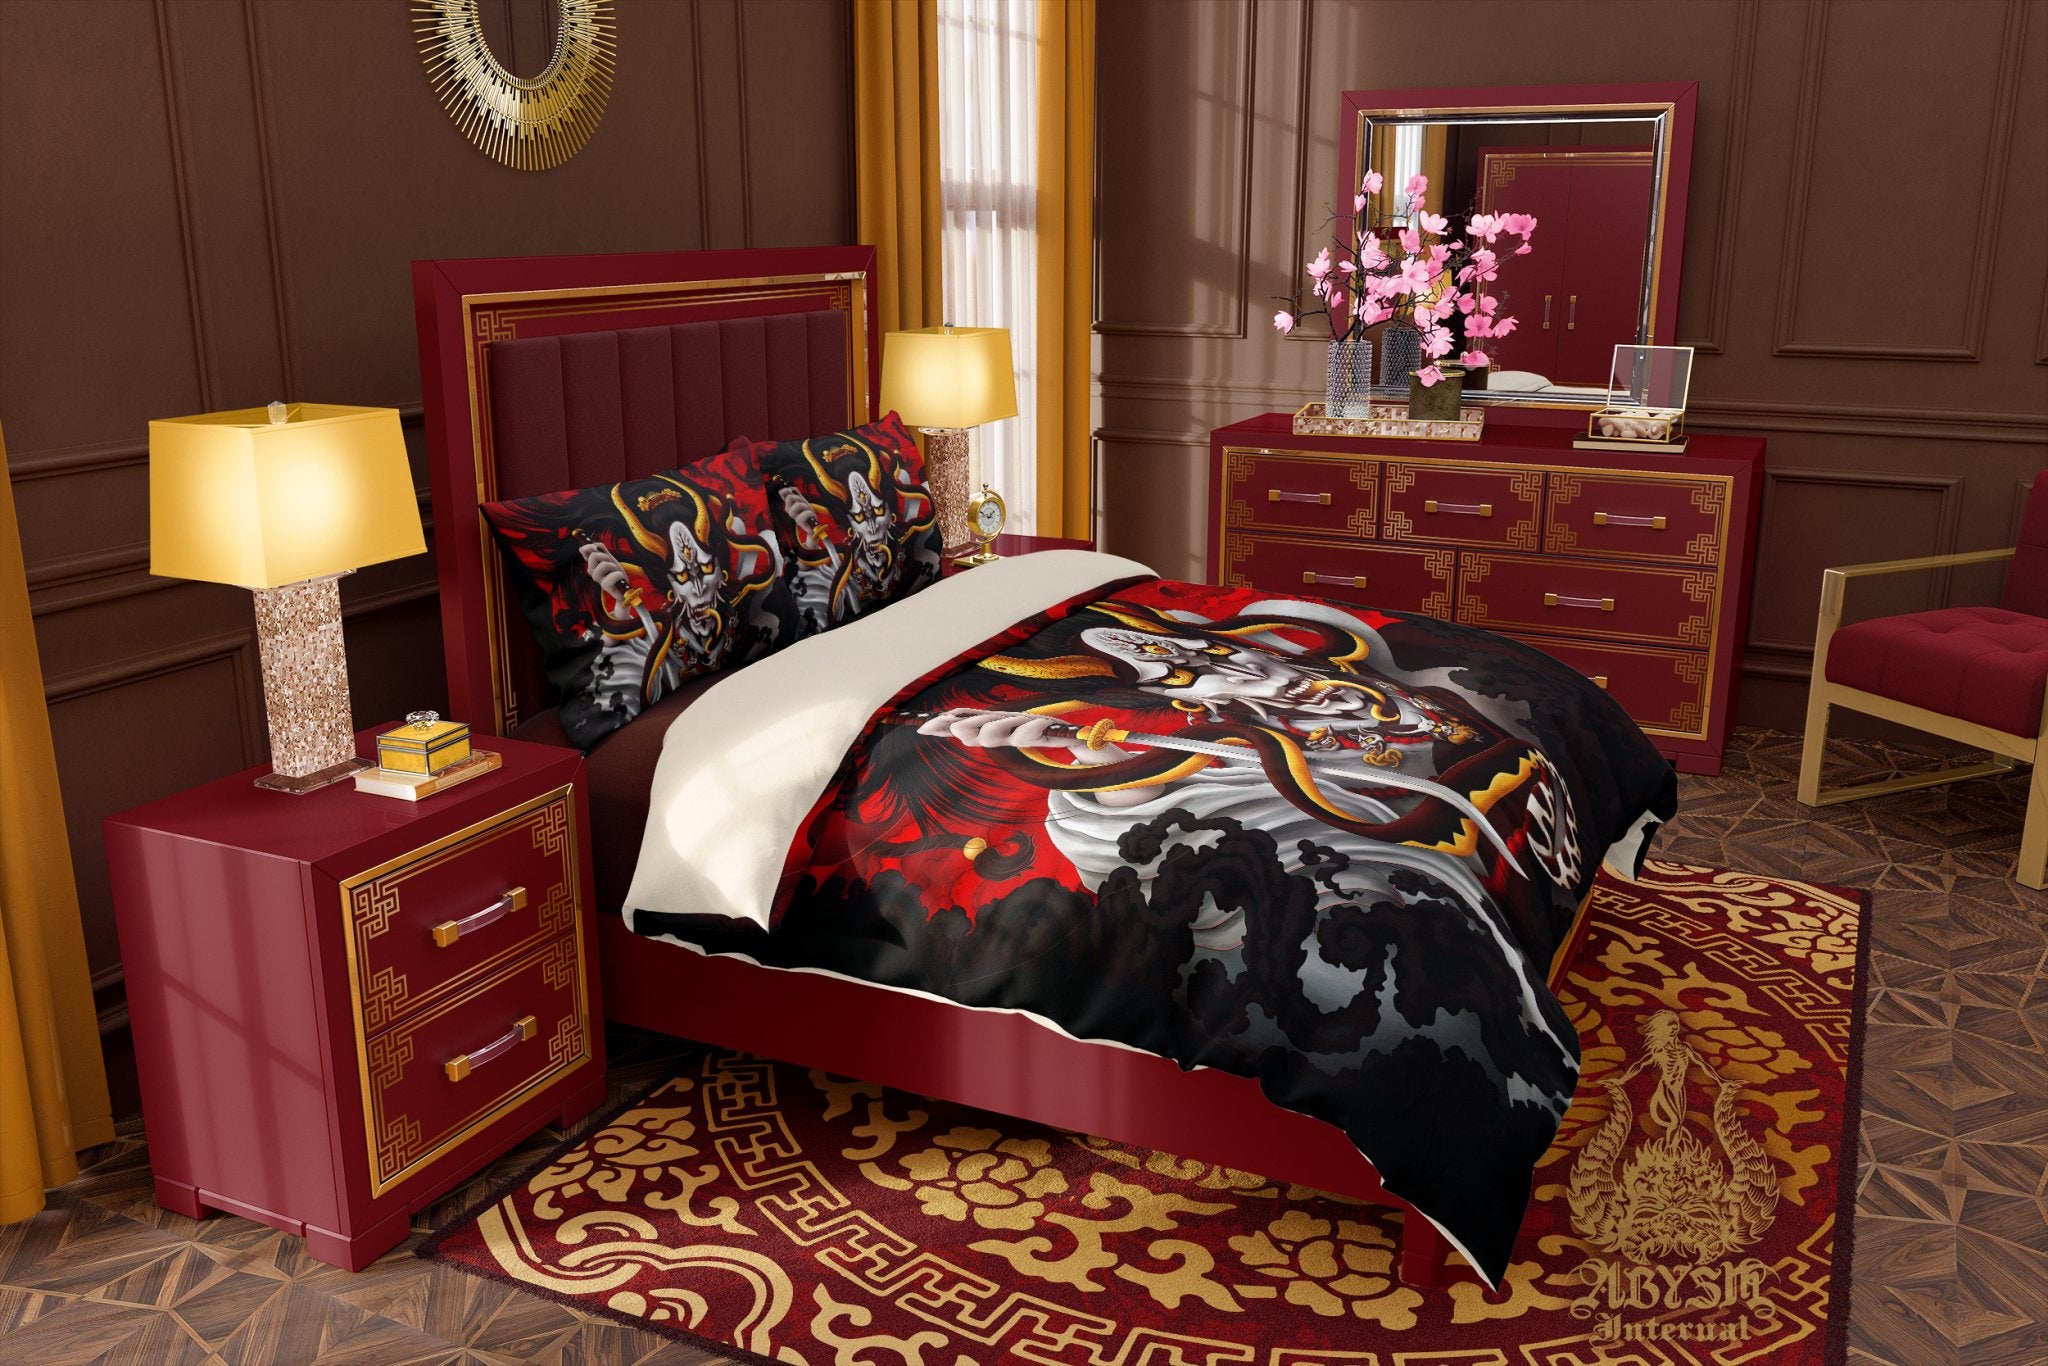 Hannya Bedding Set, Comforter or Duvet, Japanese Demon Bed Cover, Anime Youkai Bedroom Decor, King, Queen & Twin Size - Snake, Original Colors - Abysm Internal